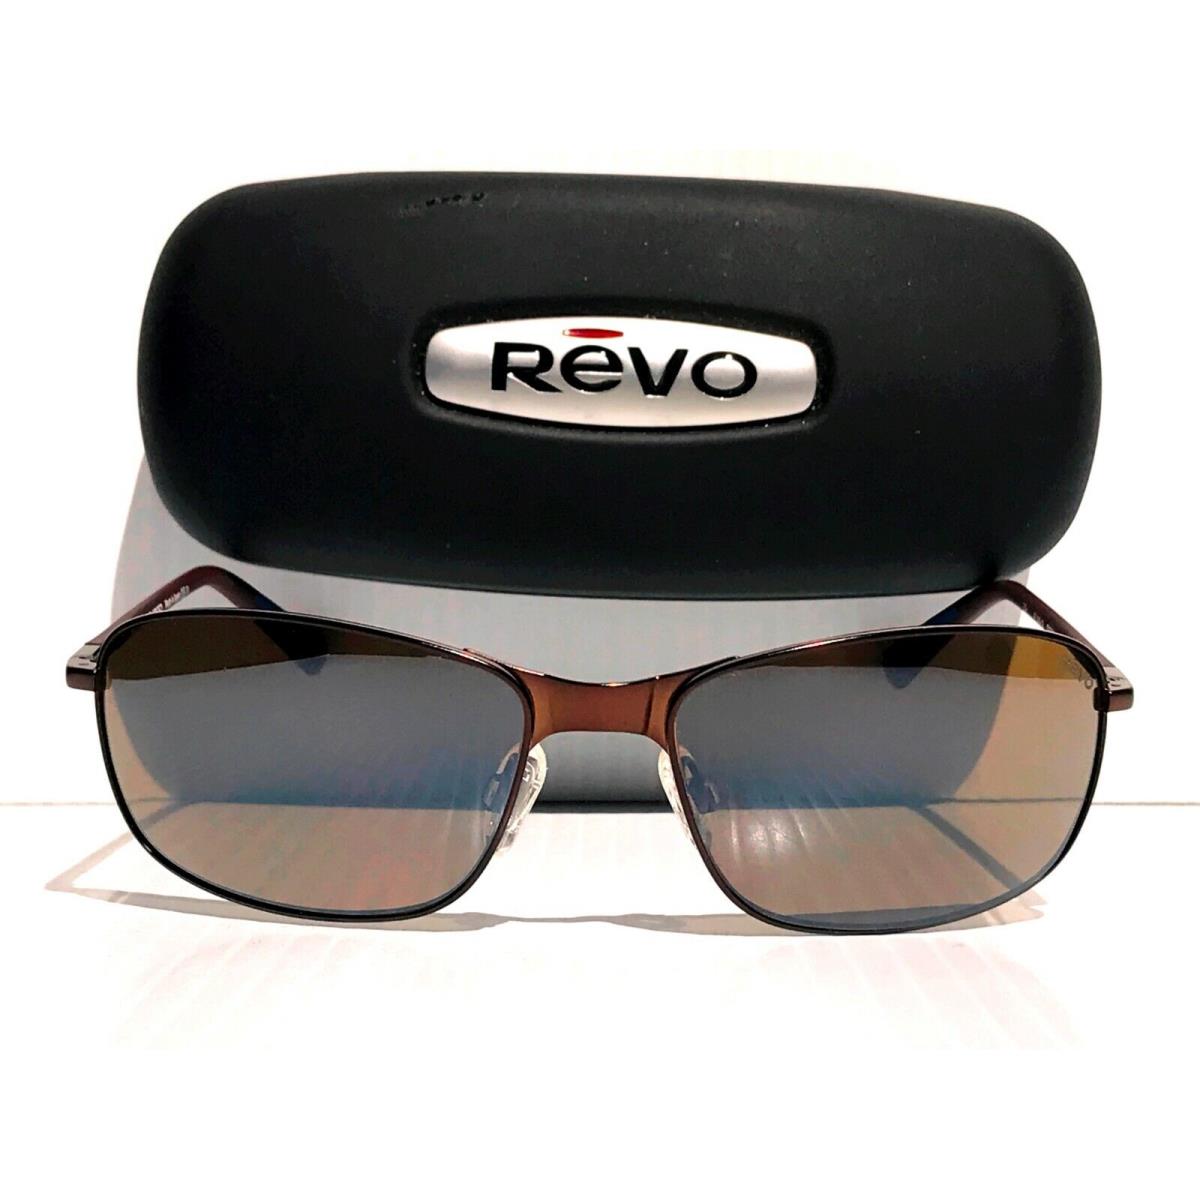 Revo sunglasses DECOY - Brown Frame, Brown Lens